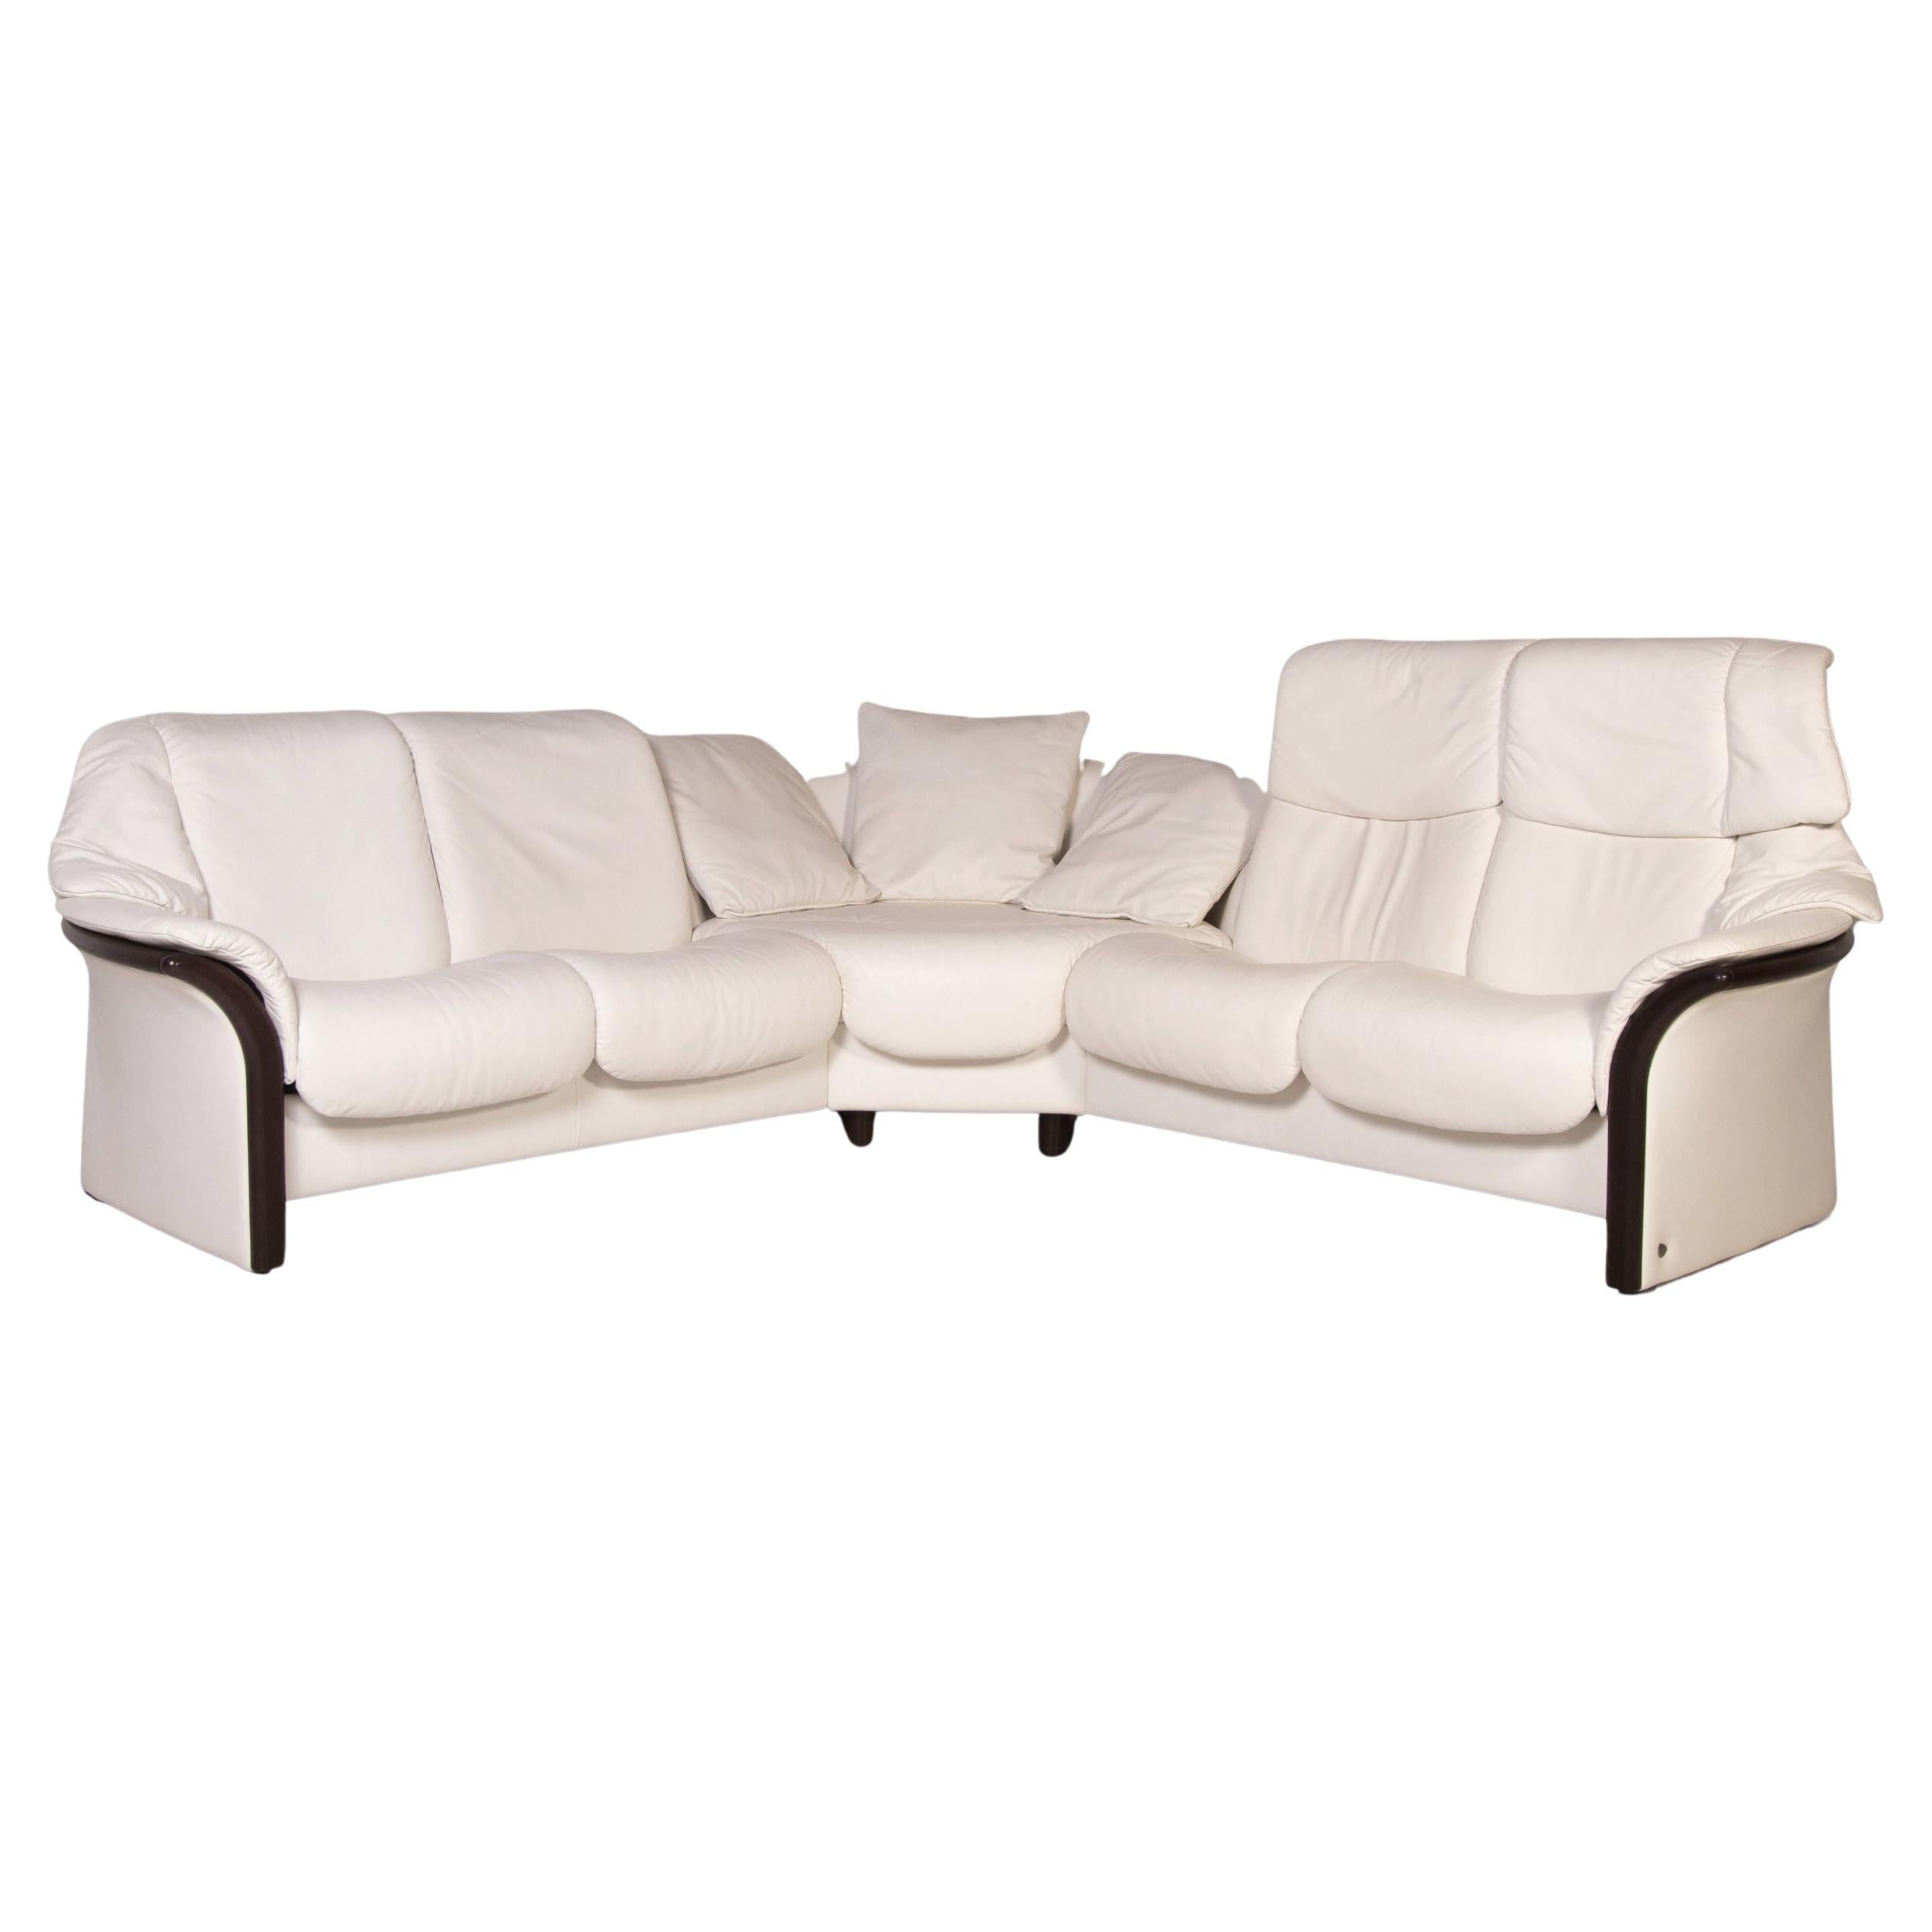 Stressless Eldorado Leather Corner Sofa White Relax Function Sofa Couch For Sale